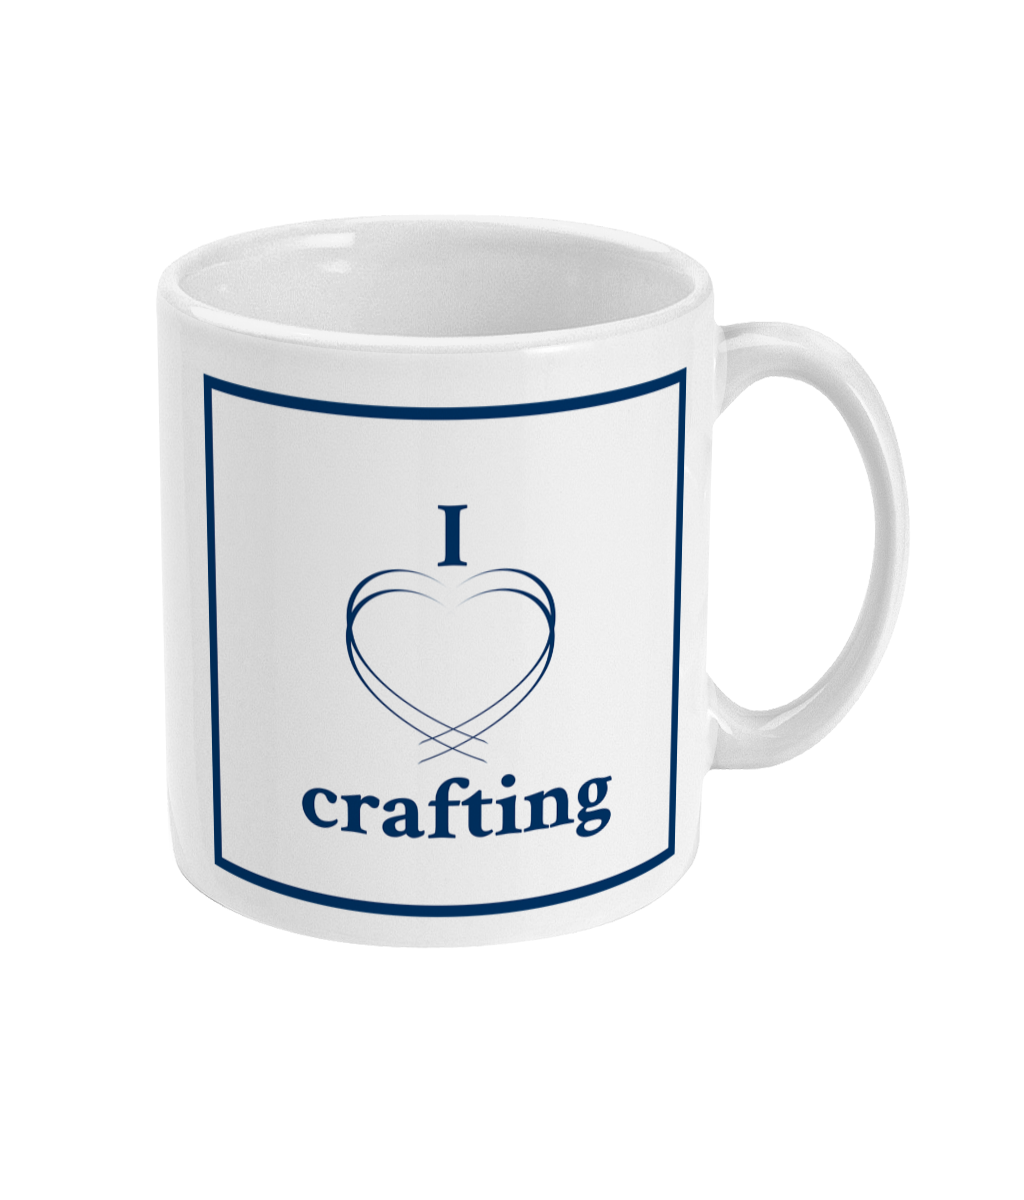 mug with I love crafting printed on it